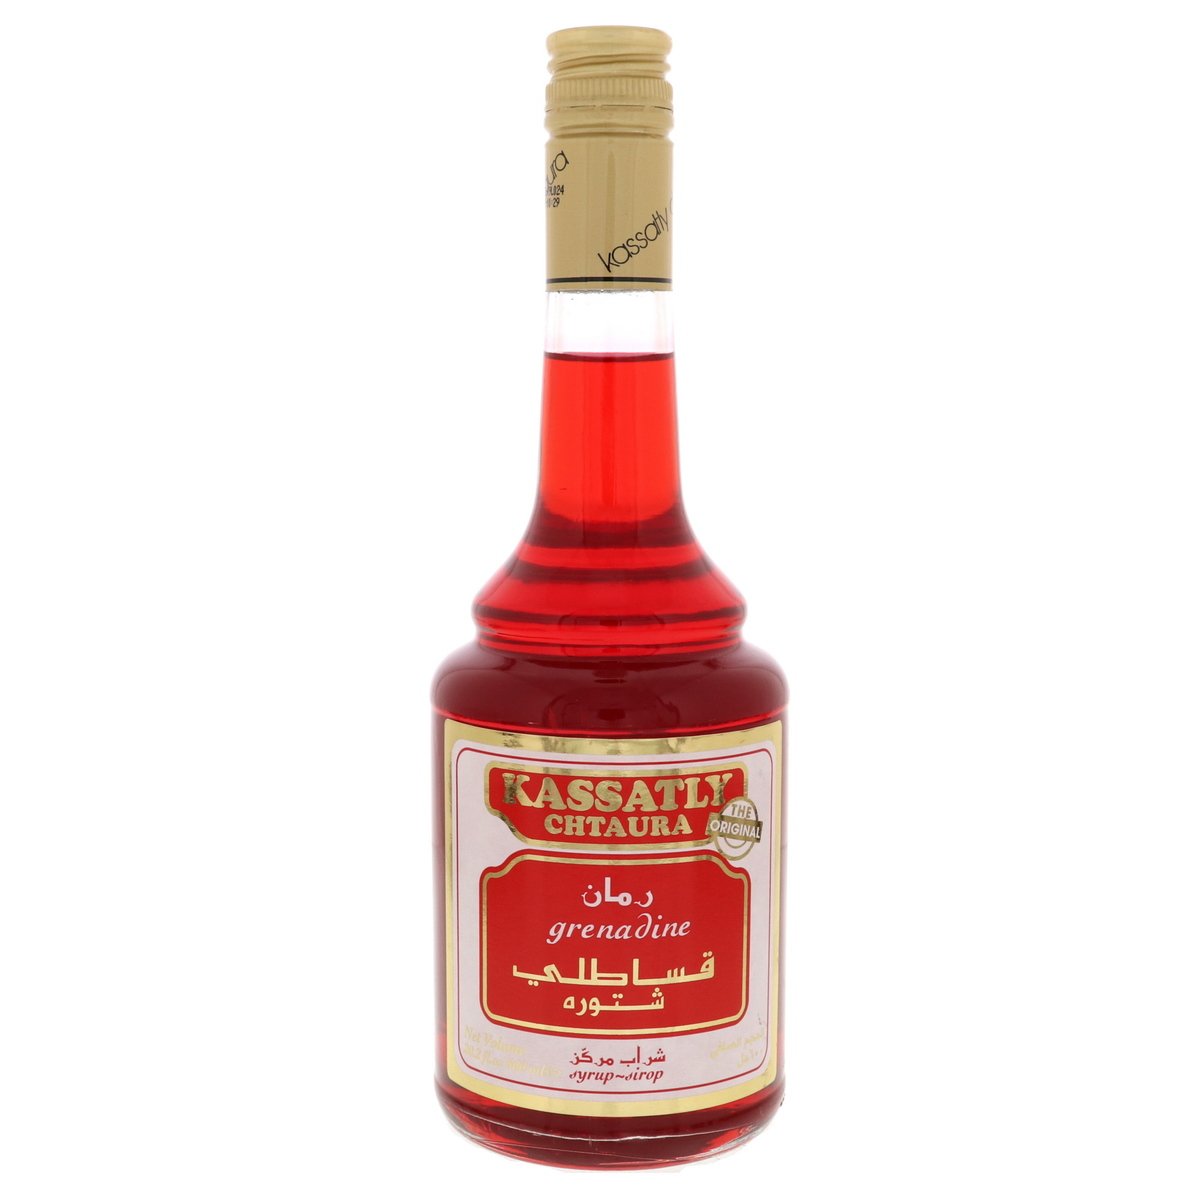 Kassatly Grenadine Syrup Original Value Pack 600 ml